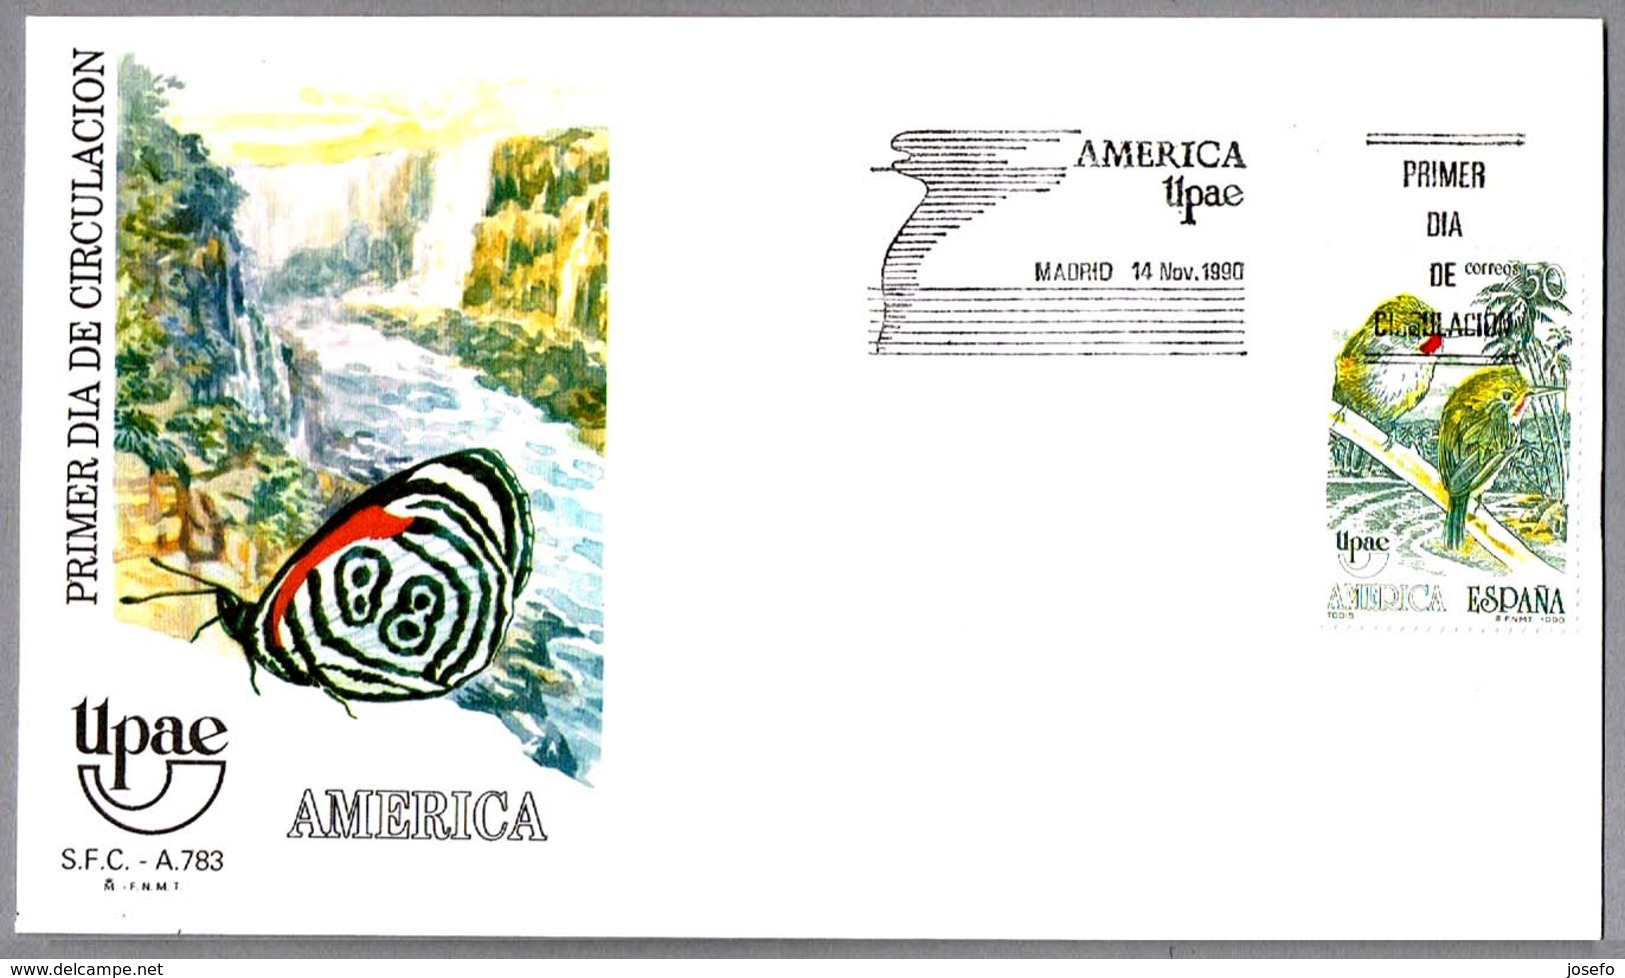 America UPAE - AVE TODIS - TODUS. FDC Madrid 1990 - Obliteraciones & Sellados Mecánicos (Publicitarios)